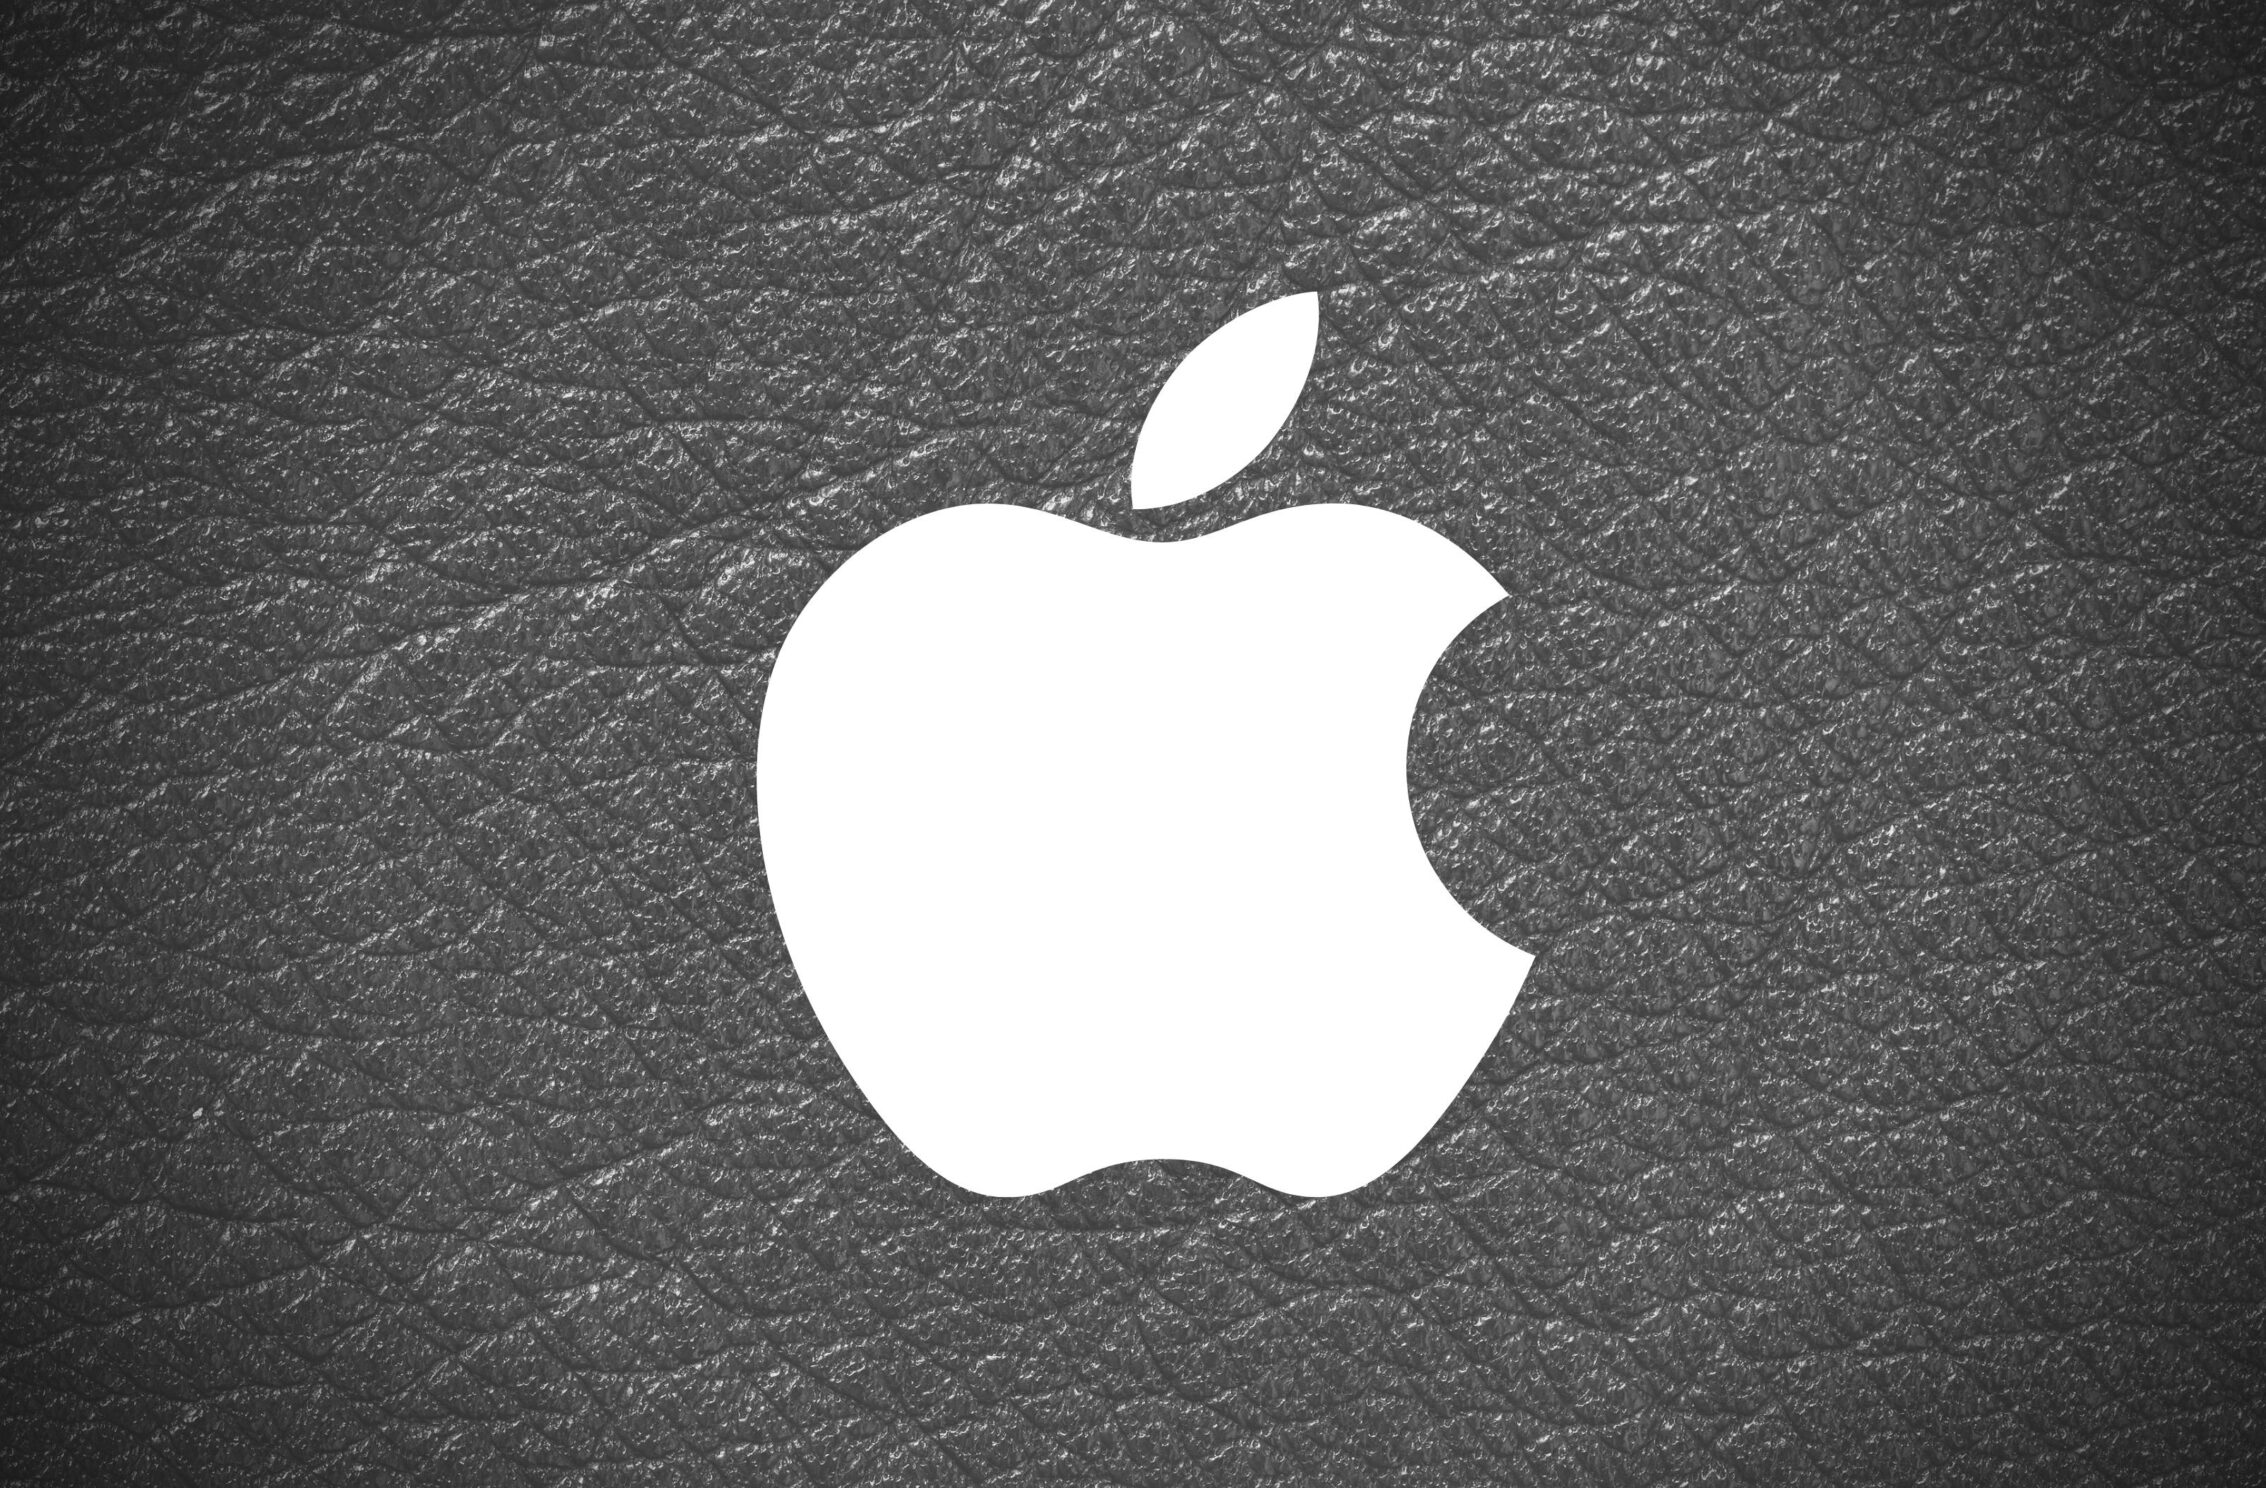 2266x1488 wallpaper Apple Logo Leather Black and White iPad Wallpaper 2266x1488 pixels resolution